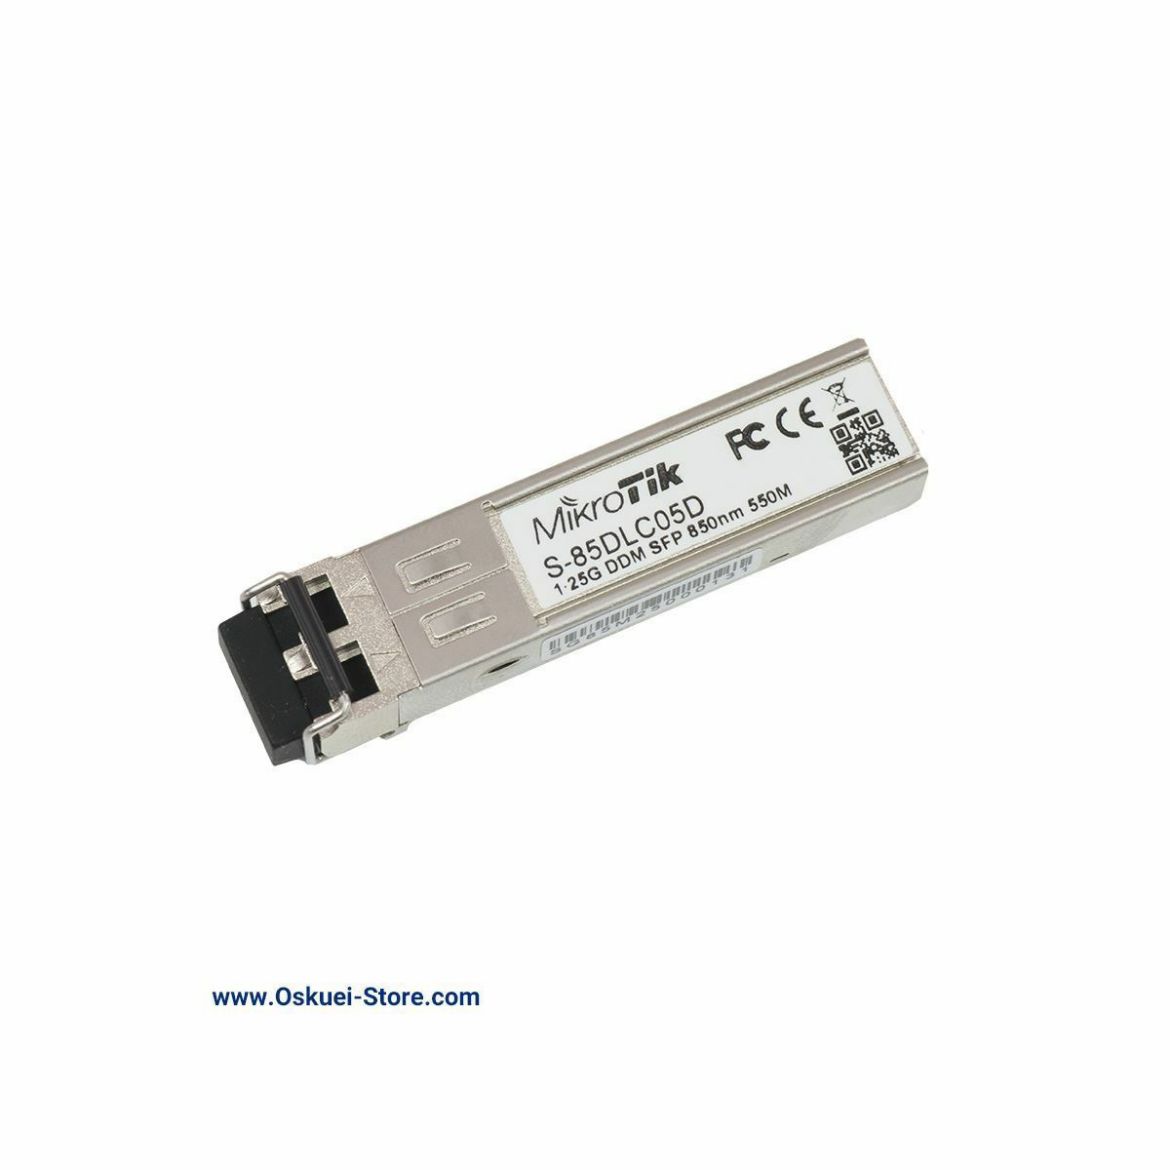 MikroTik S-85DLC05D Fiber Optics Module